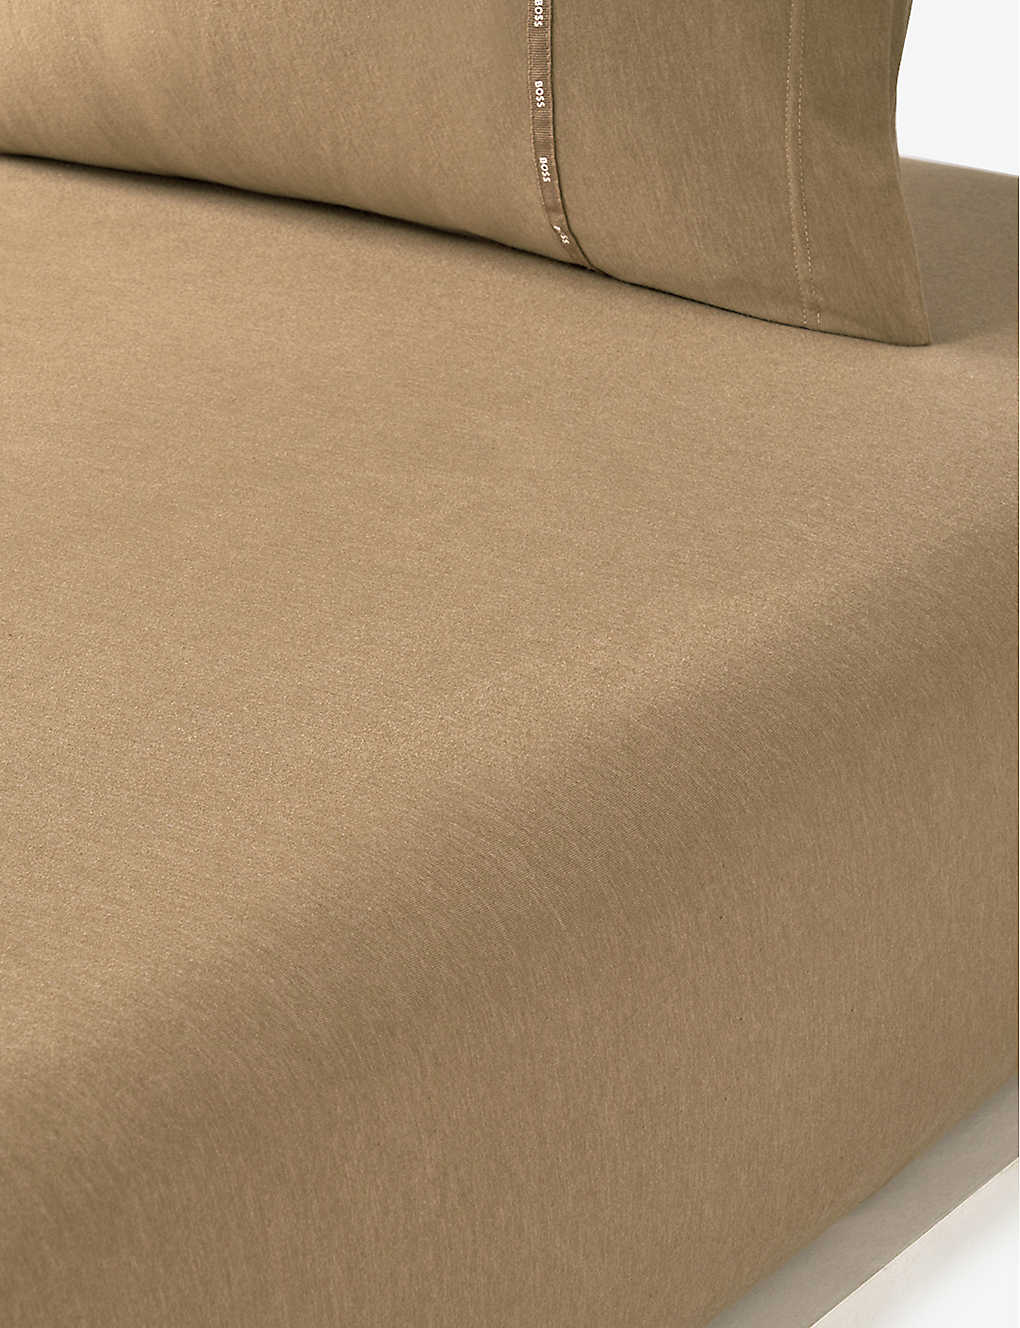 Hugo Boss Boss Camel Sense Cotton And Modal-blend Fitted Sheet 90cm X 200cm In Brown